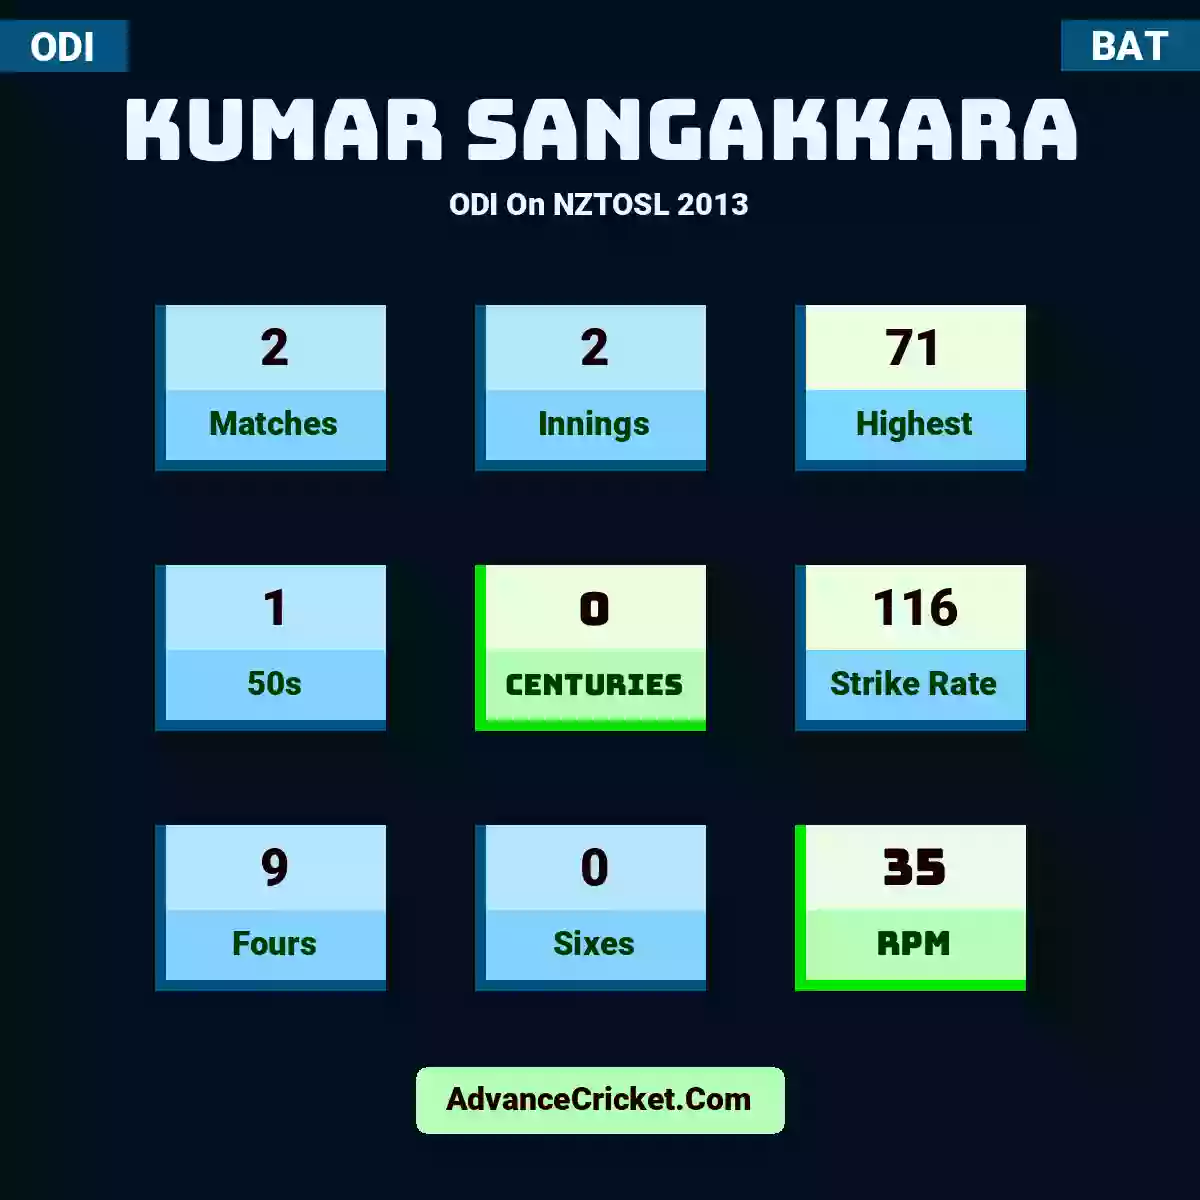 Kumar Sangakkara ODI  On NZTOSL 2013, Kumar Sangakkara played 2 matches, scored 71 runs as highest, 1 half-centuries, and 0 centuries, with a strike rate of 116. K.Sangakkara hit 9 fours and 0 sixes, with an RPM of 35.